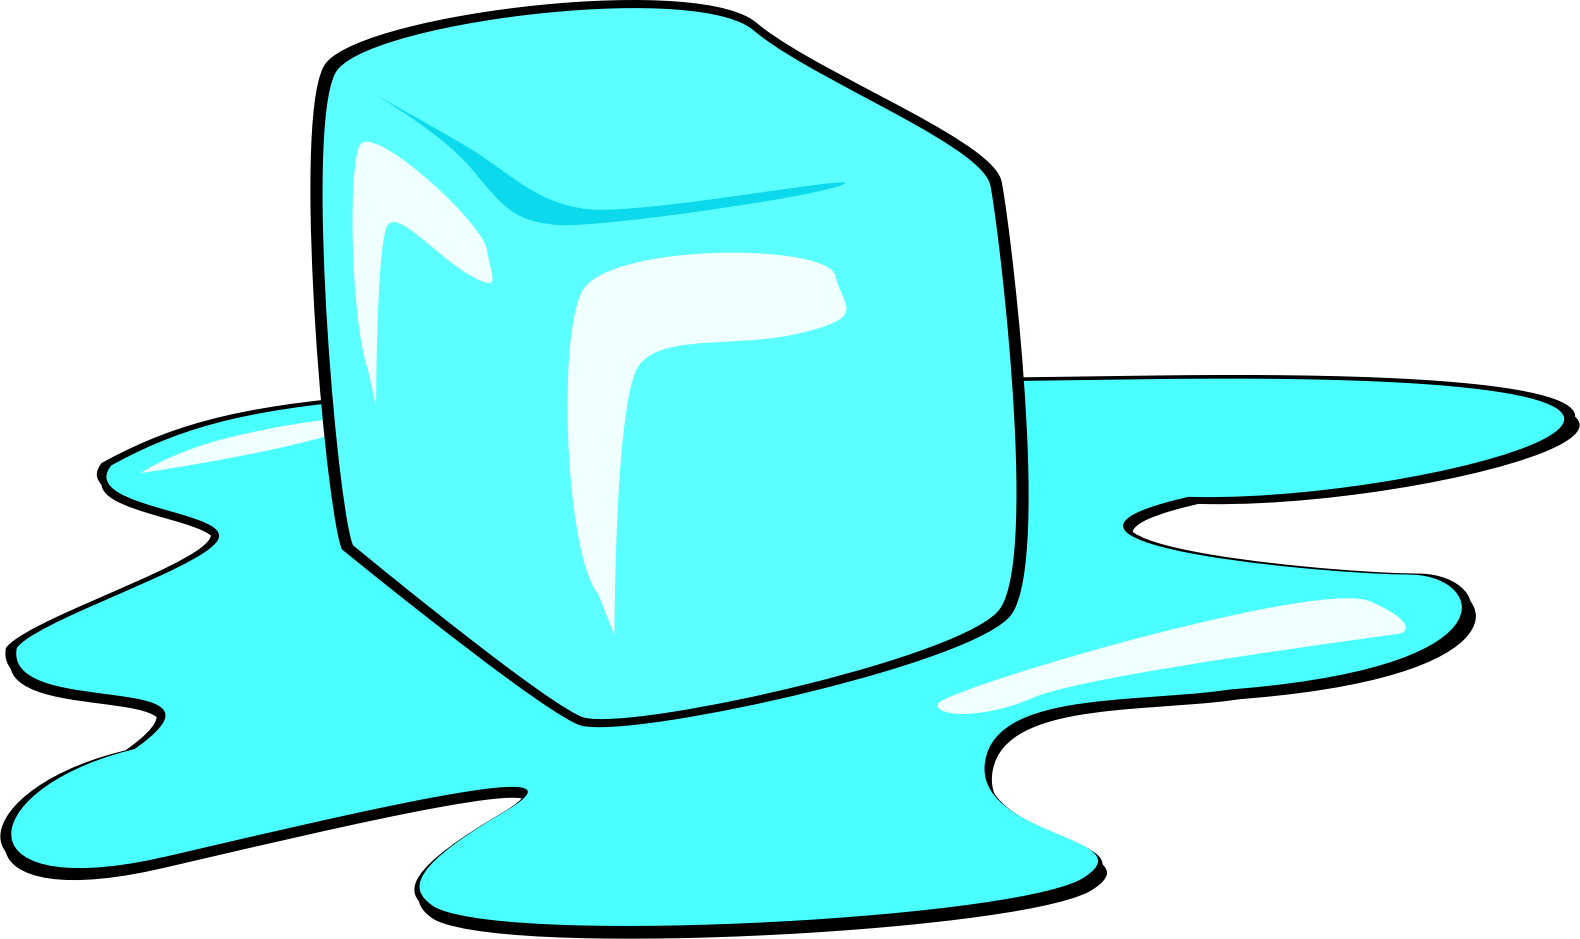 Cube ice